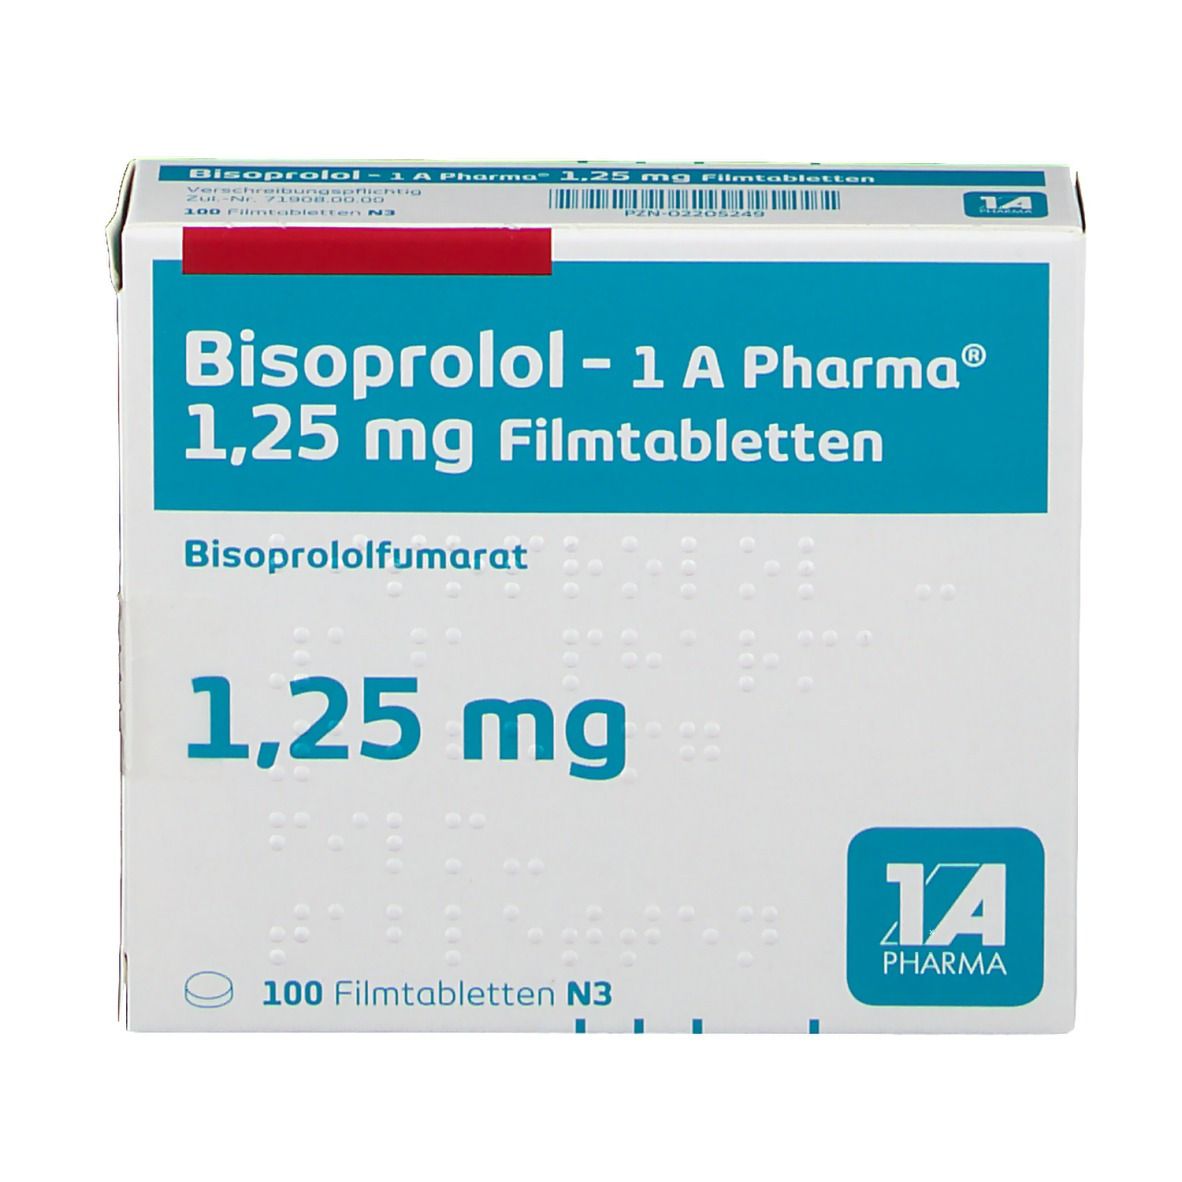 Бисопролол дозировка какие бывают. Бисопролол 1.25 мг. Бисопролол 1.25мг бывает. Бисопролол дозировка 1.25. Бисопролол 3 ,75 мл.